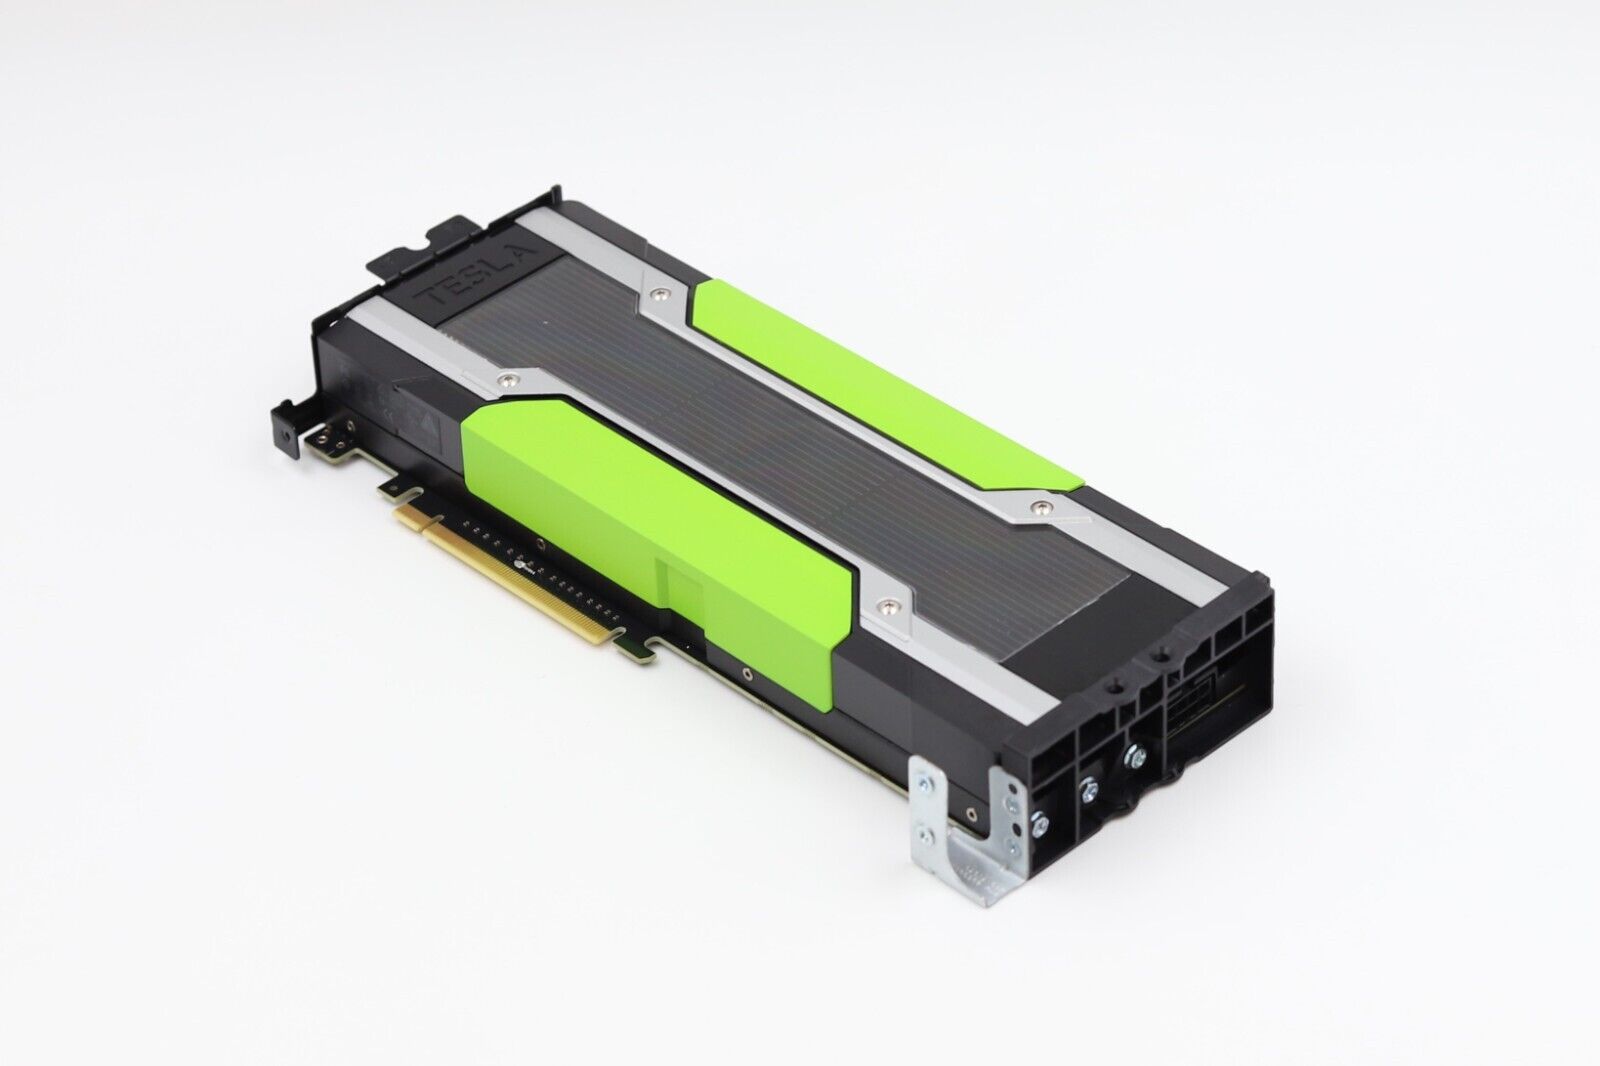 Nvidia Tesla K80 24GB GDDR5 PCIe x16 GPU Accelerator Dell P/N:0HHCJ6 Tested